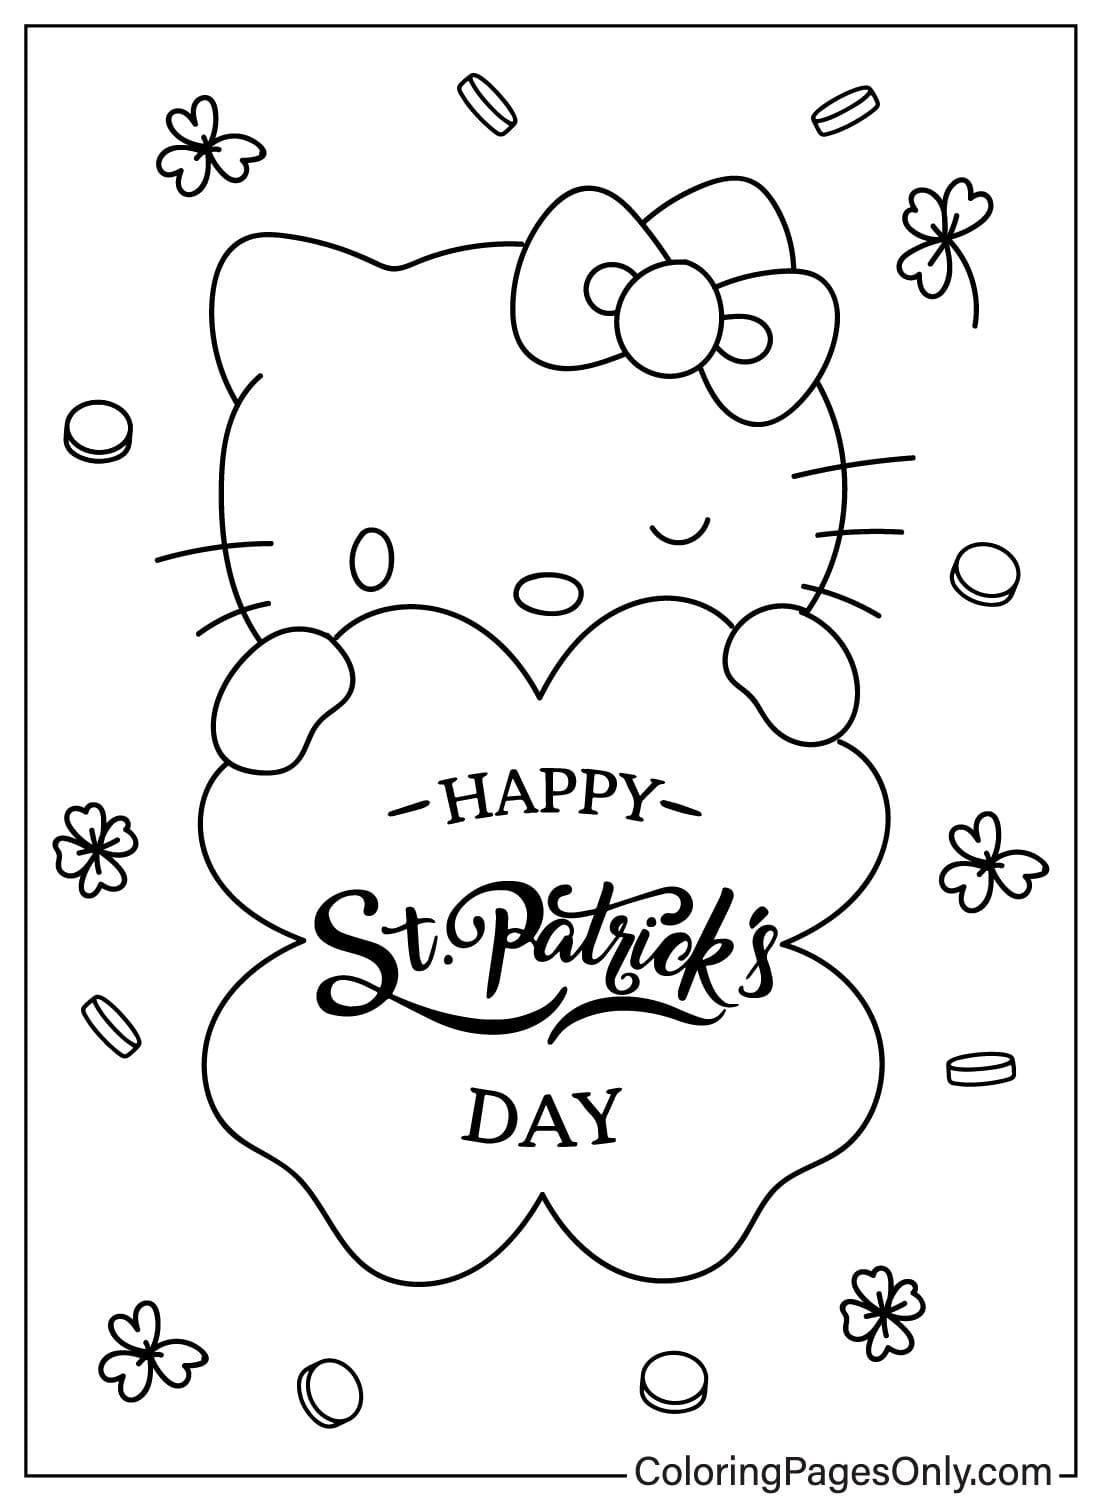 Coloriage Hello Kitty Happy St. Patrick's Day de Happy St. Patrick's Day